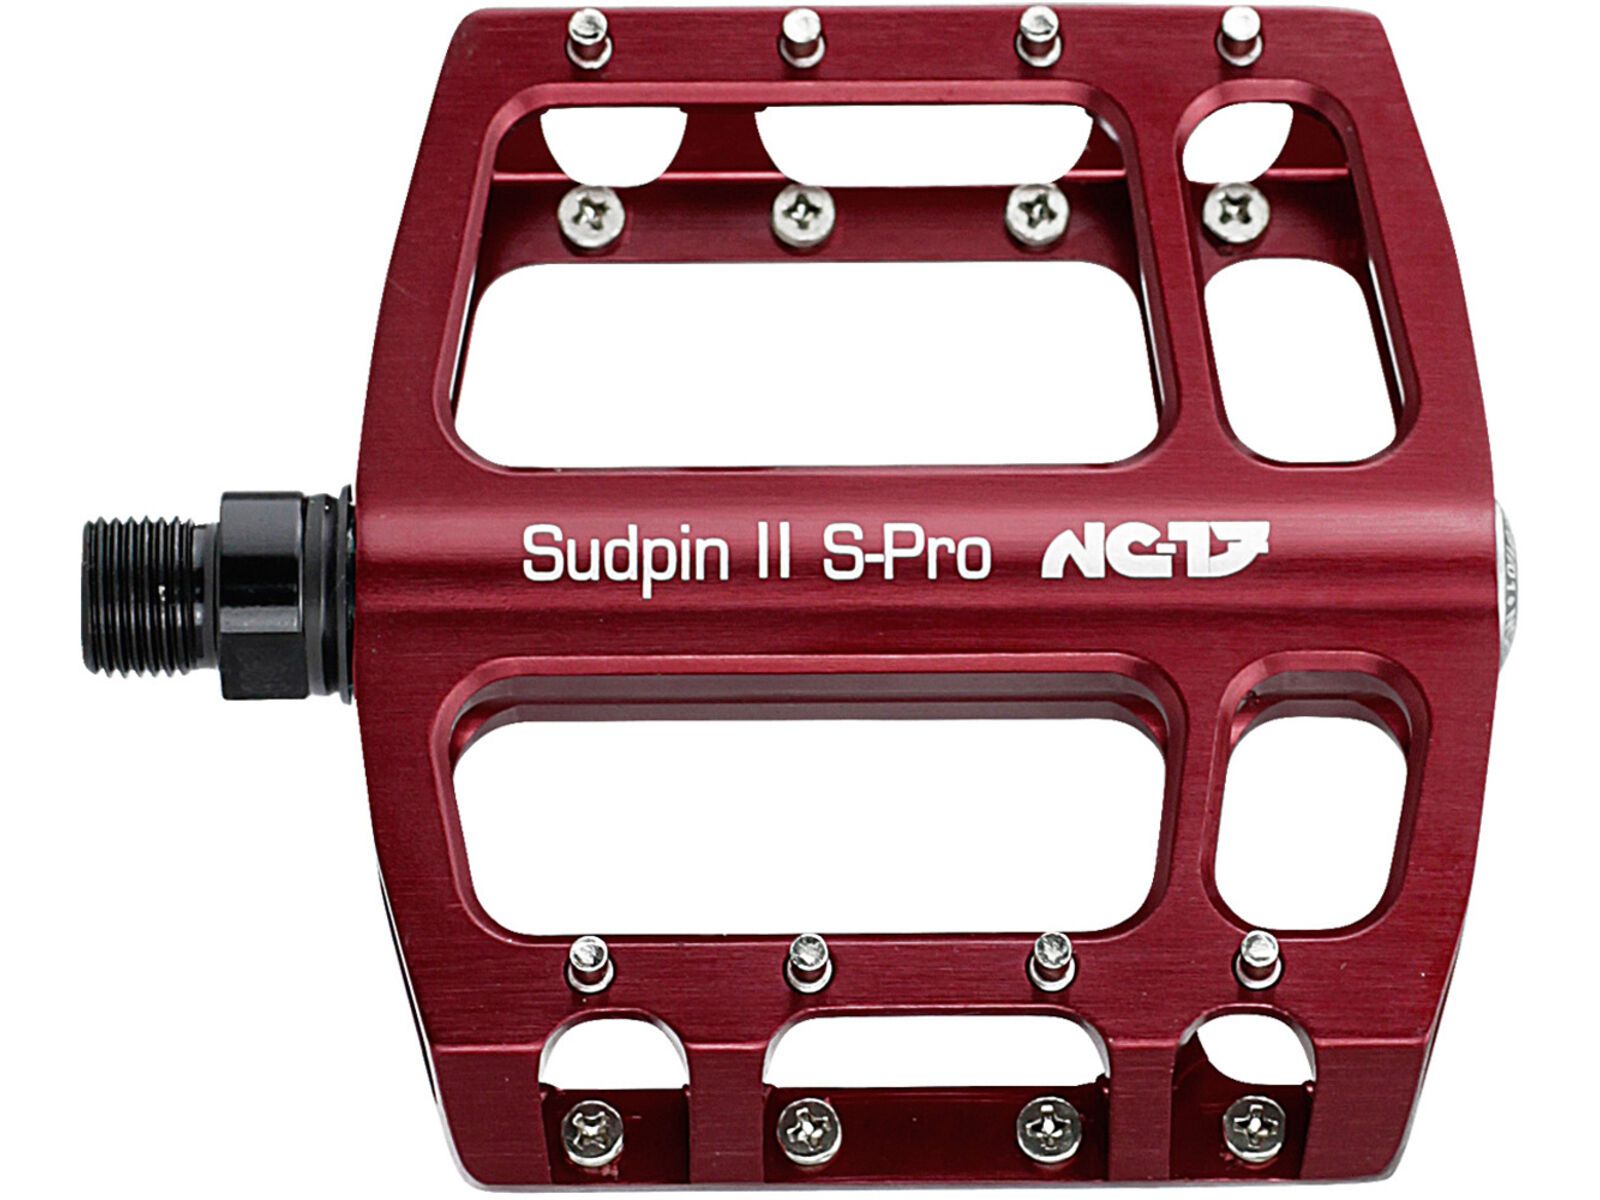 NC-17 Sudpin II S-Pro, rot | Bild 3